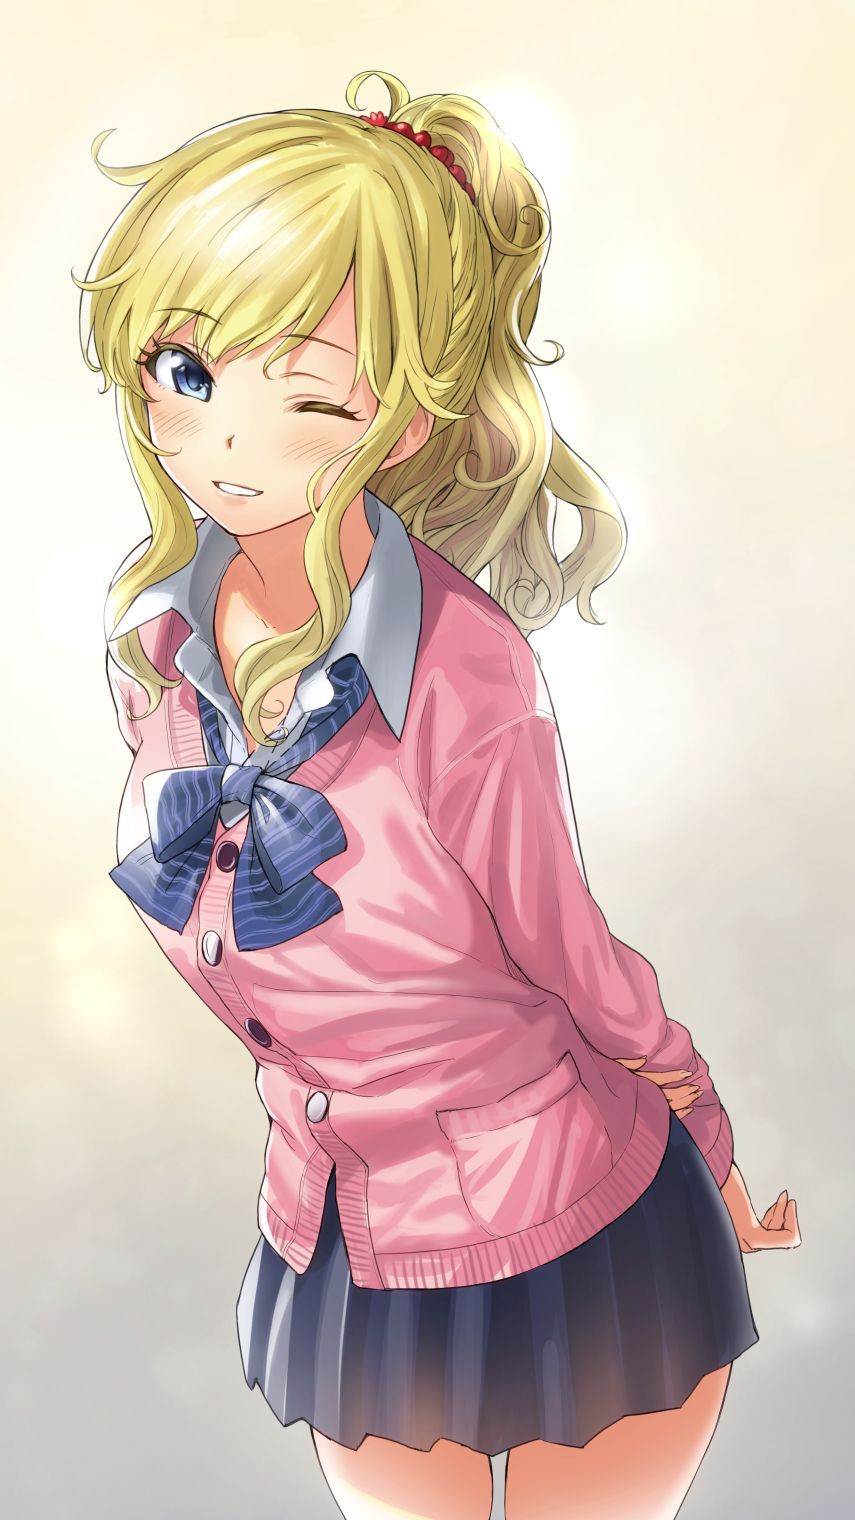 Secondary image of a cute girl in school uniform part 10 [Uniform/non-erotic] 11